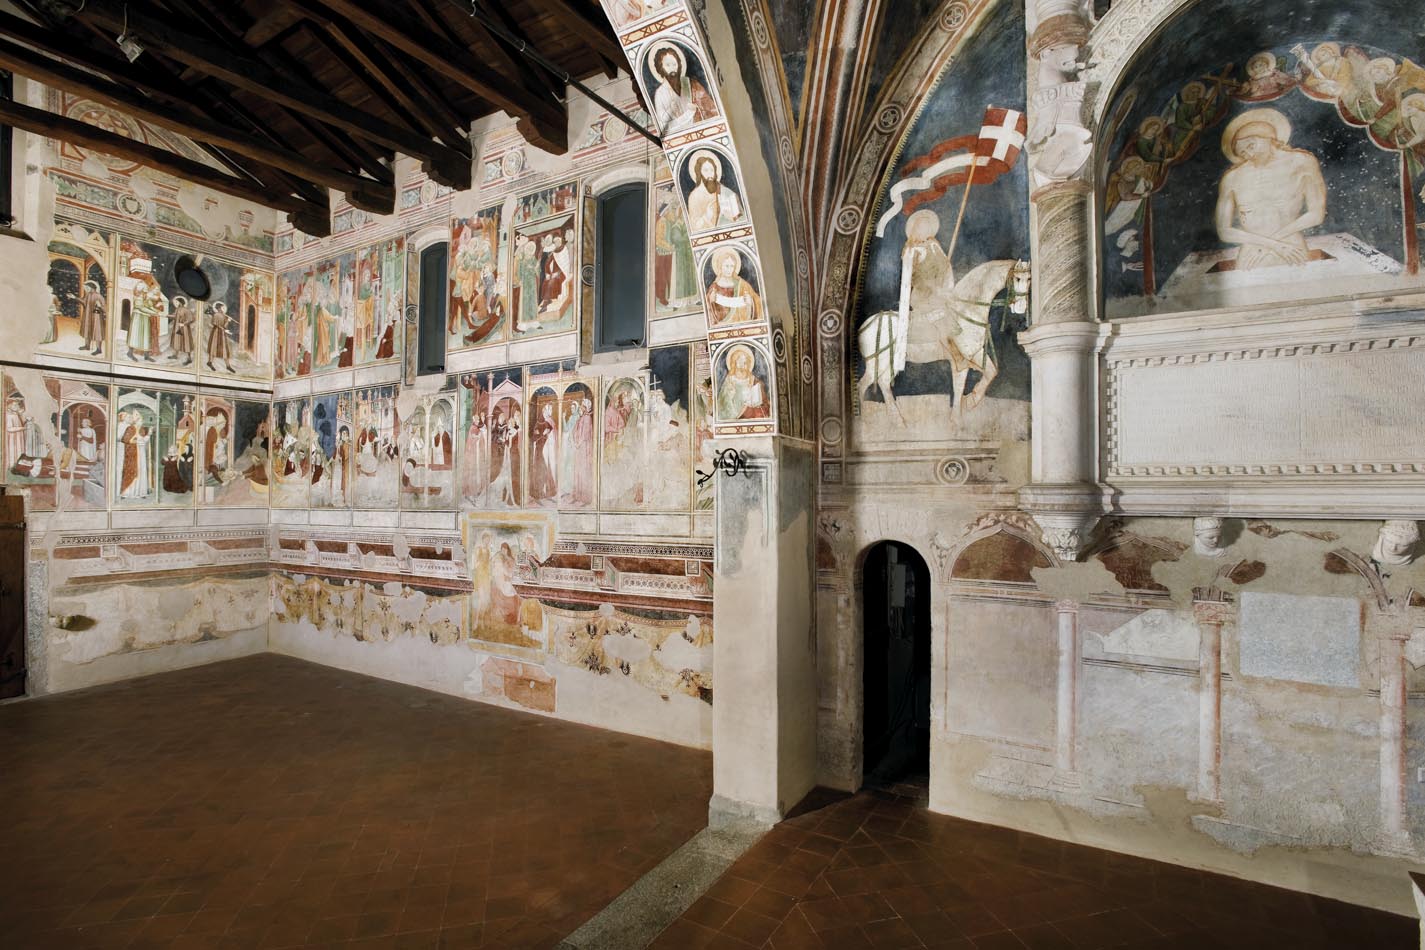 1368-69 Le comte PorroTombeau Mur gauche S. Stefano di Lentate